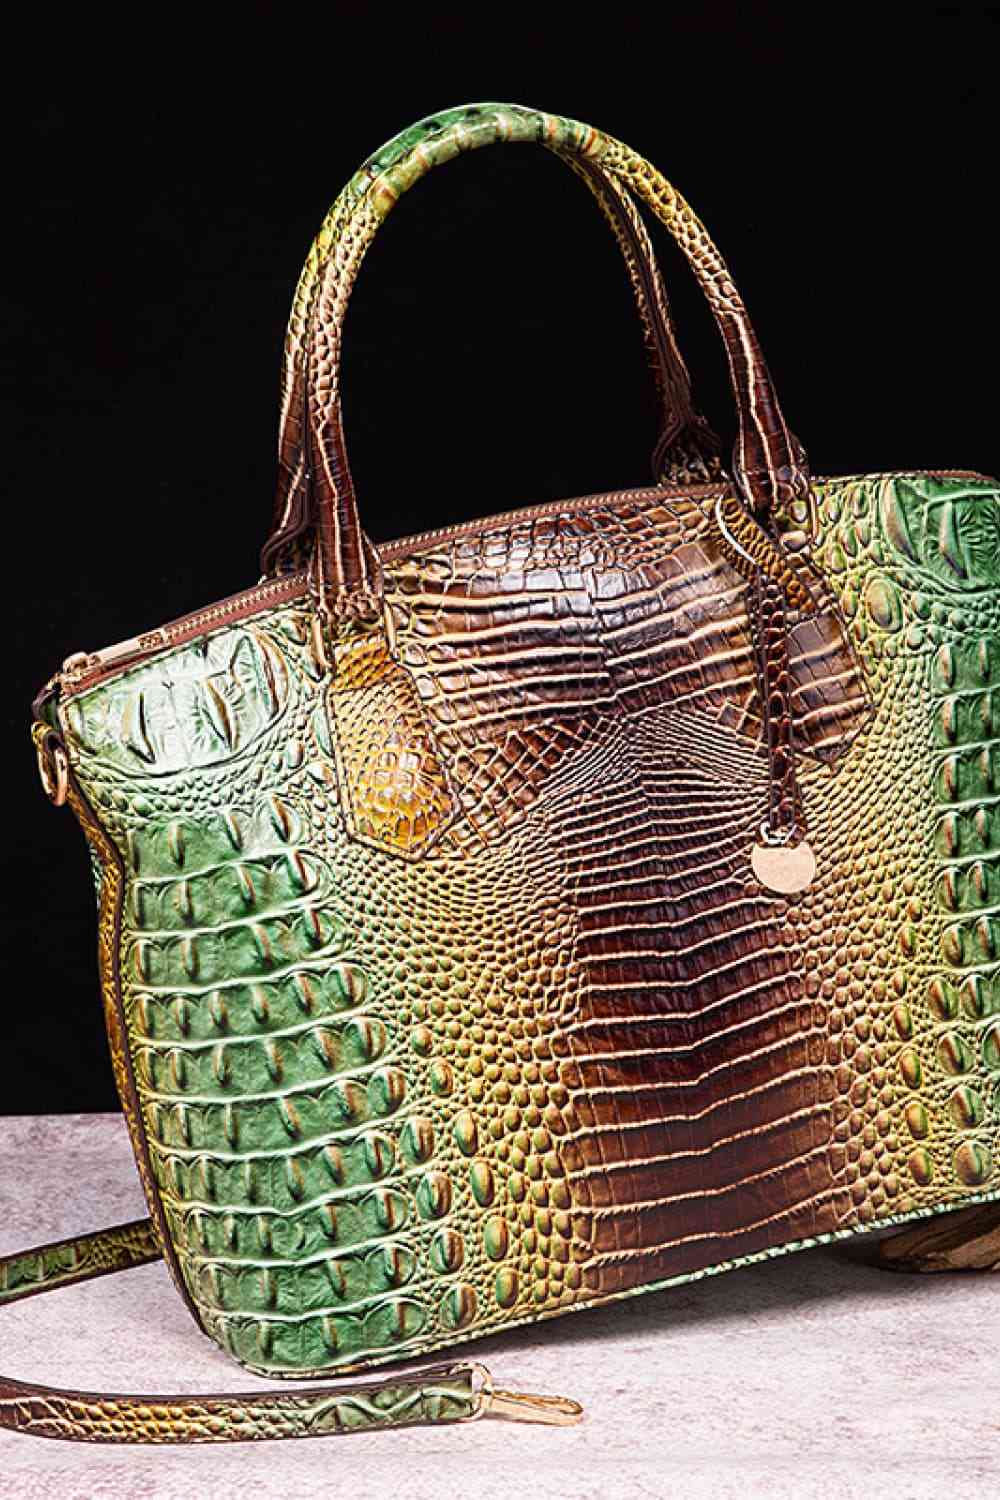 Gradient Print Lizard Skin Vegan Leather Handbag